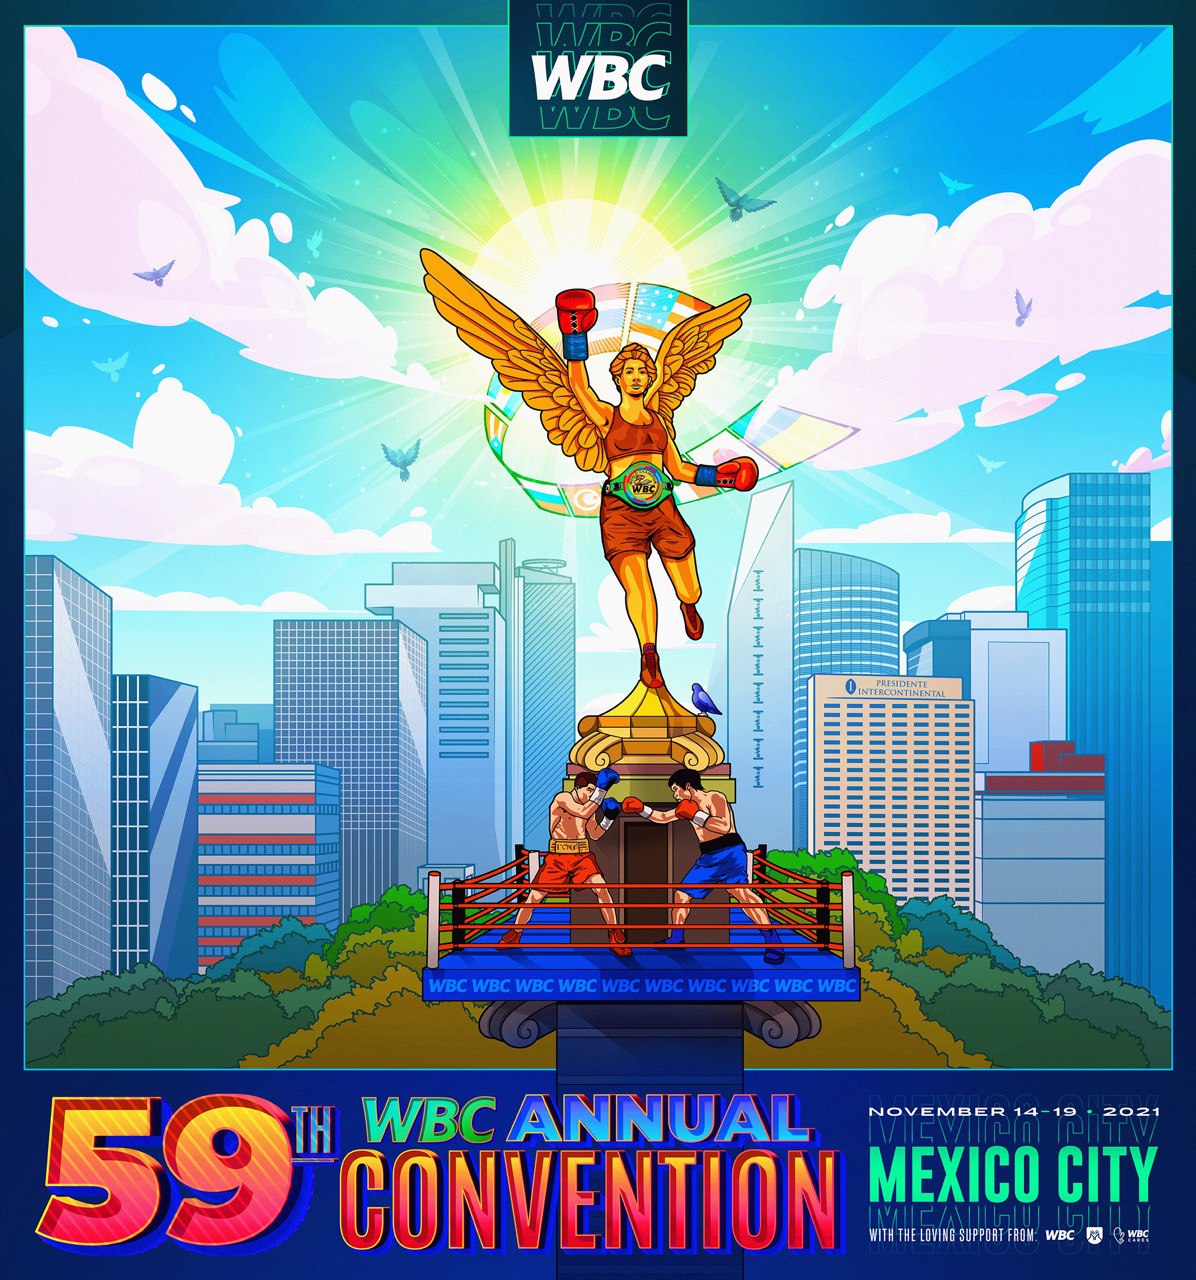 https://suljosblog.com/suljos/wp-content/uploads/2021/10/WBC-CONVENTION-2021-ART.jpg